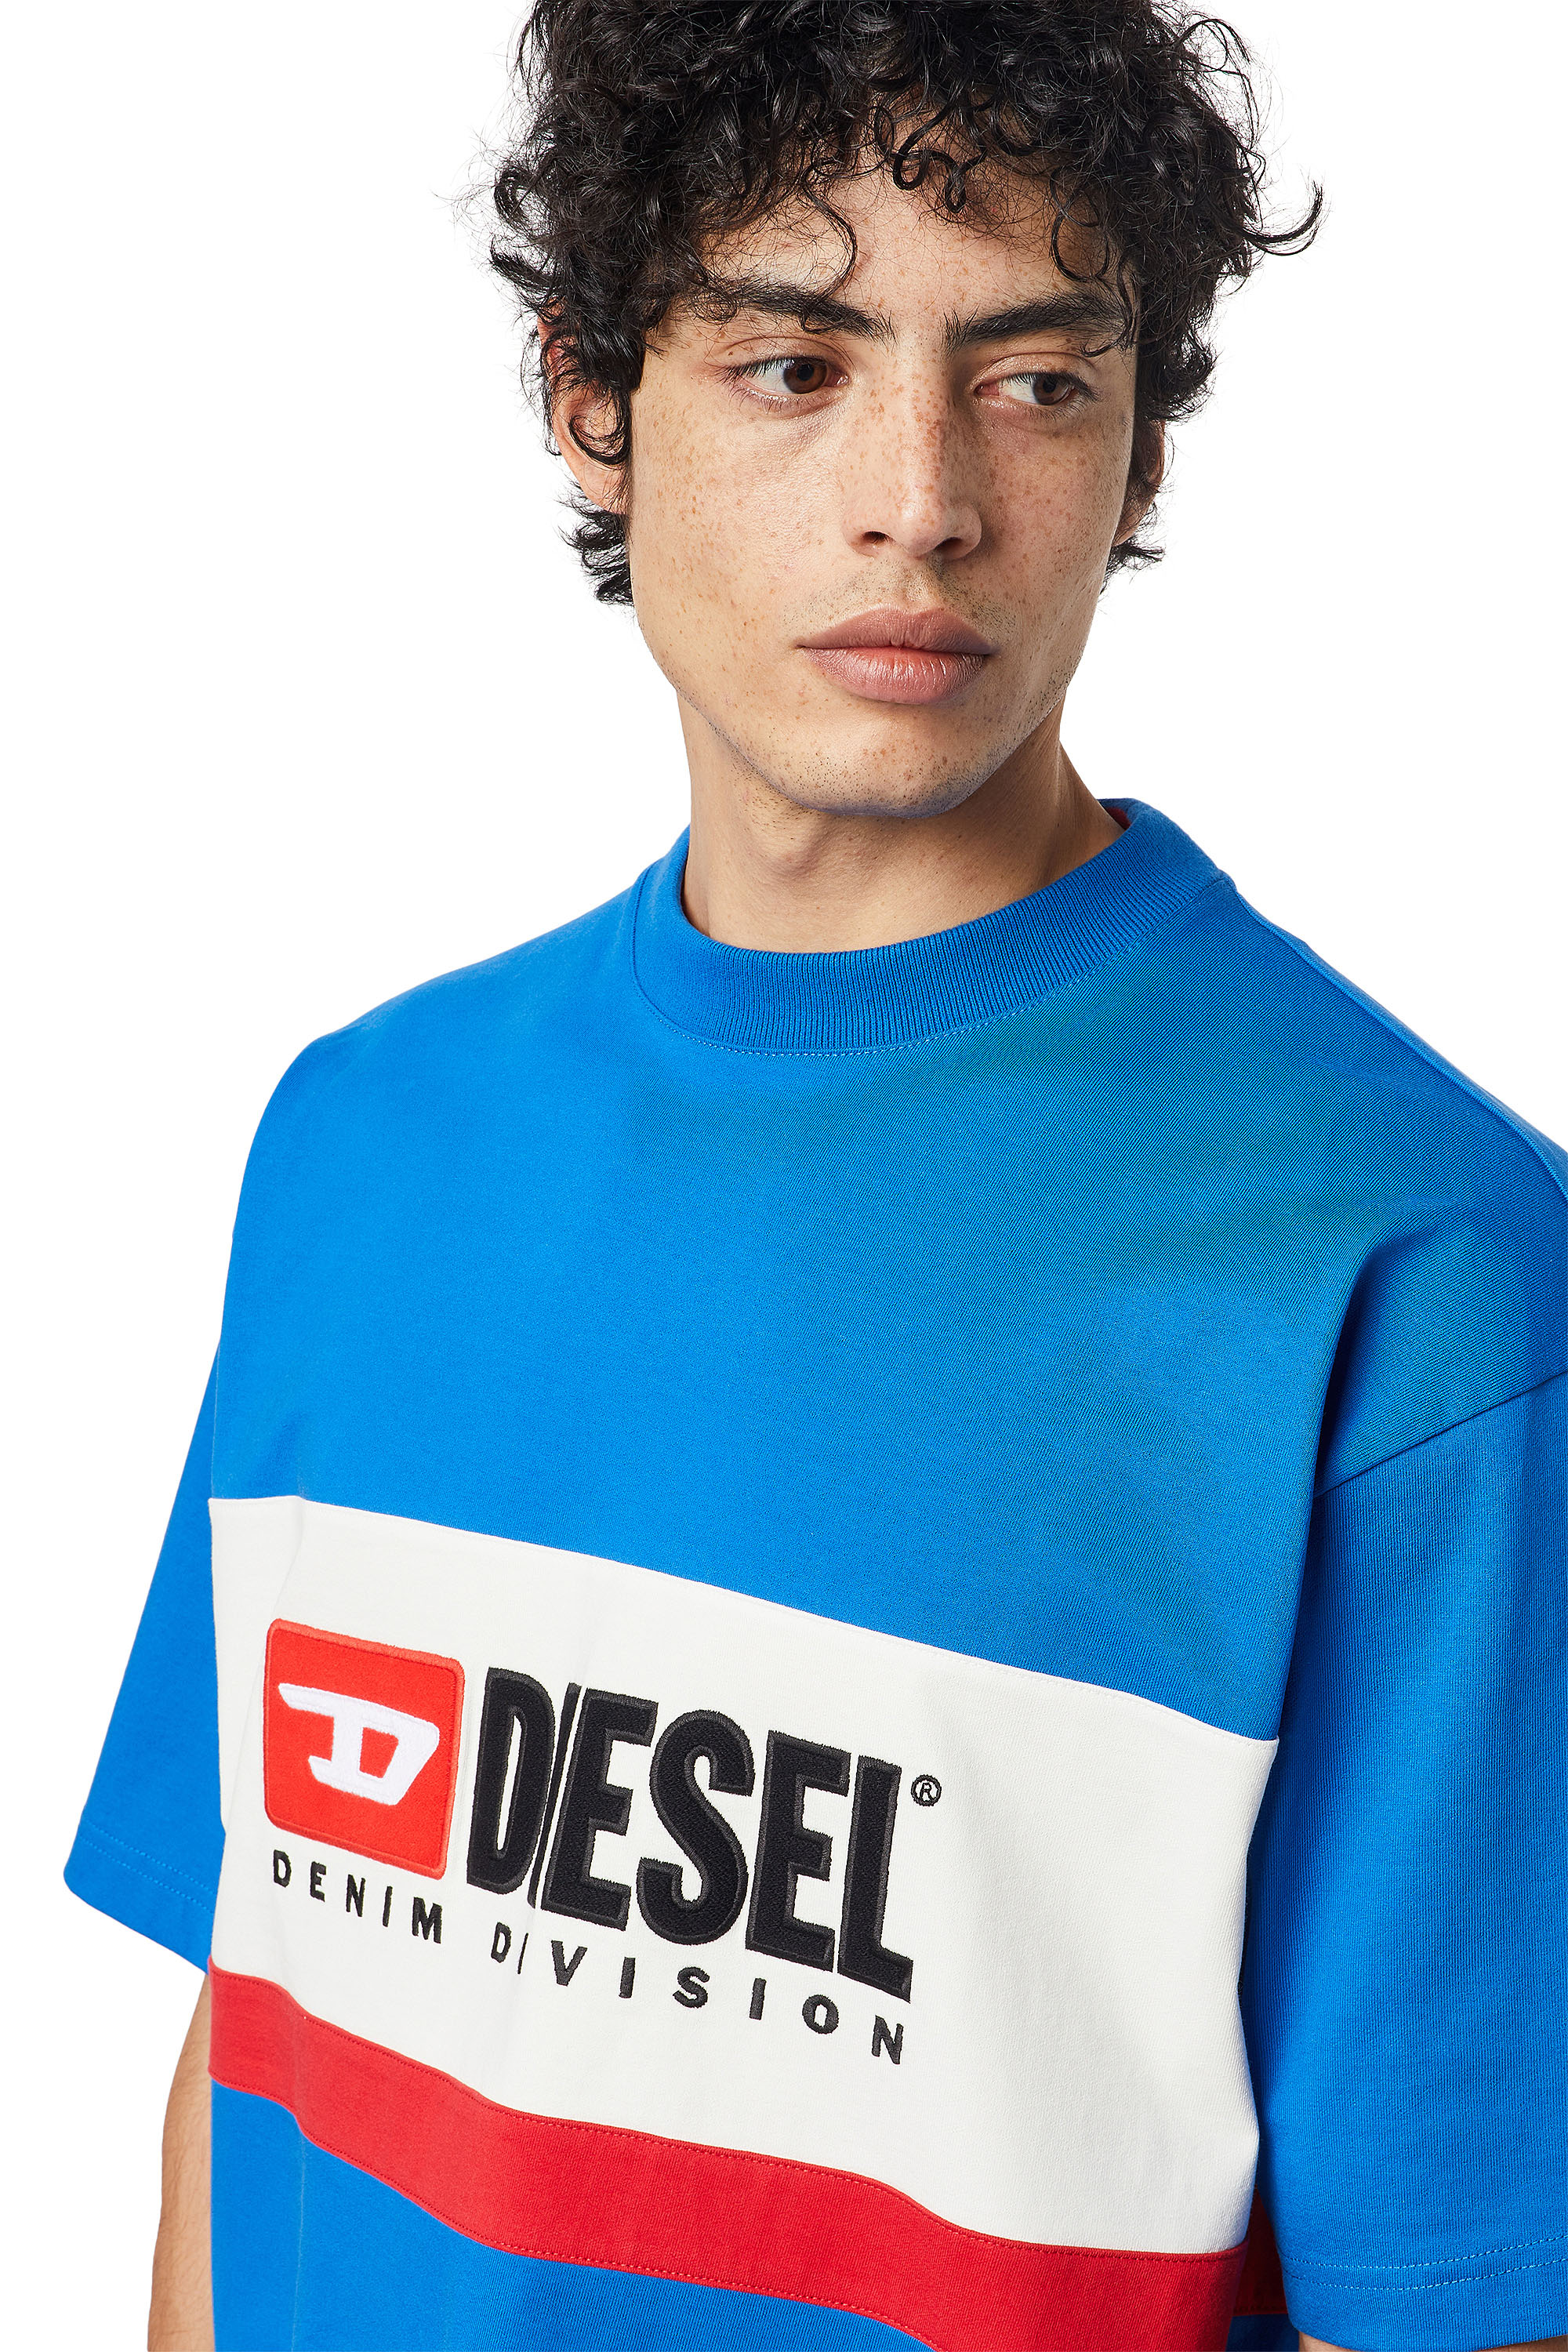 Diesel - T-STREAP-DIVISION, Blue - Image 3